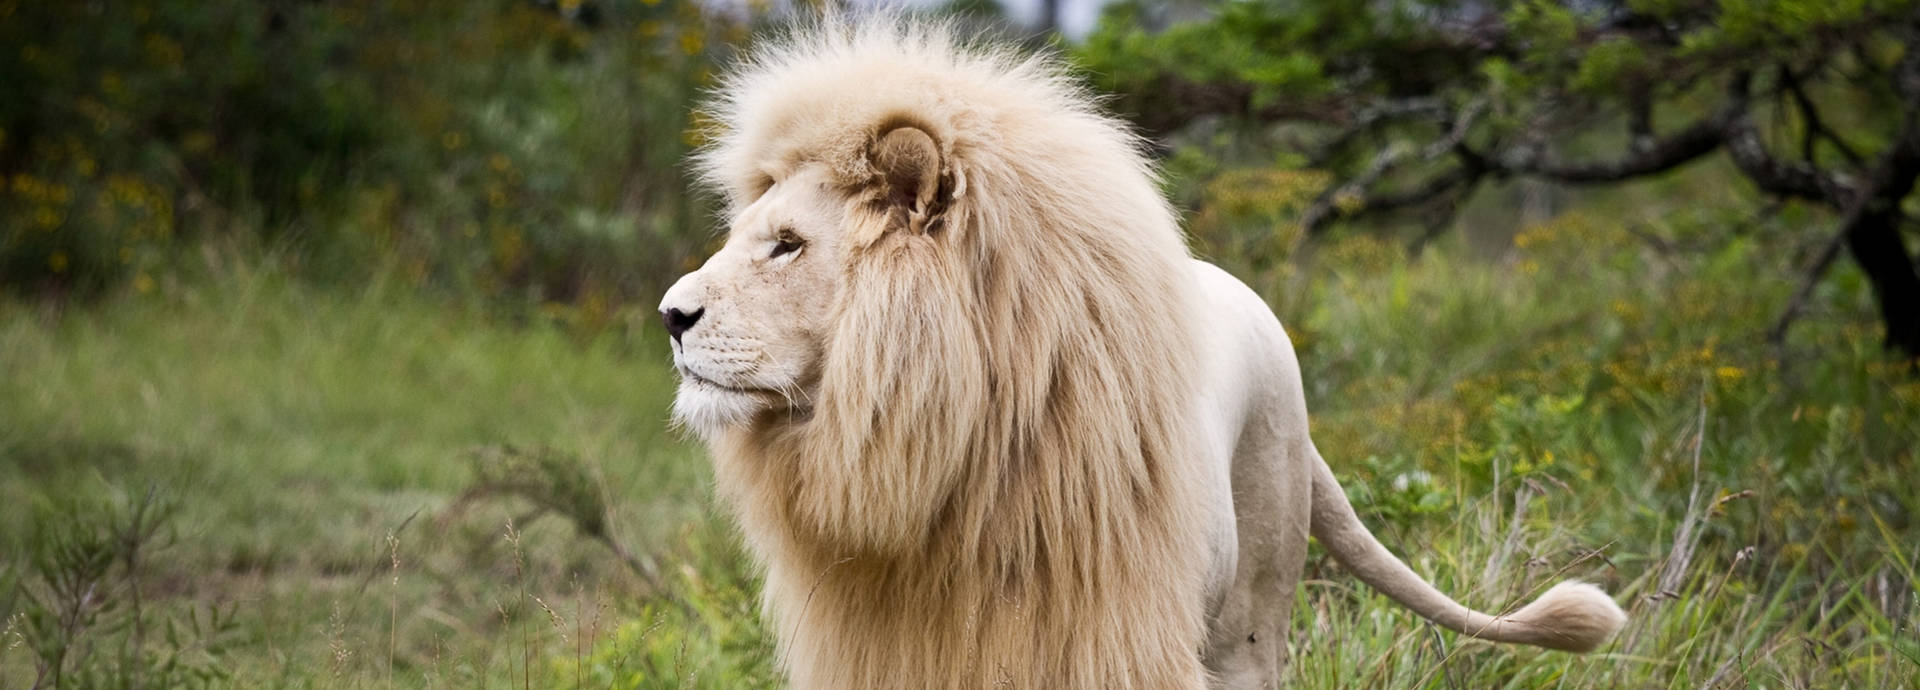 Magnificent White Lion Background